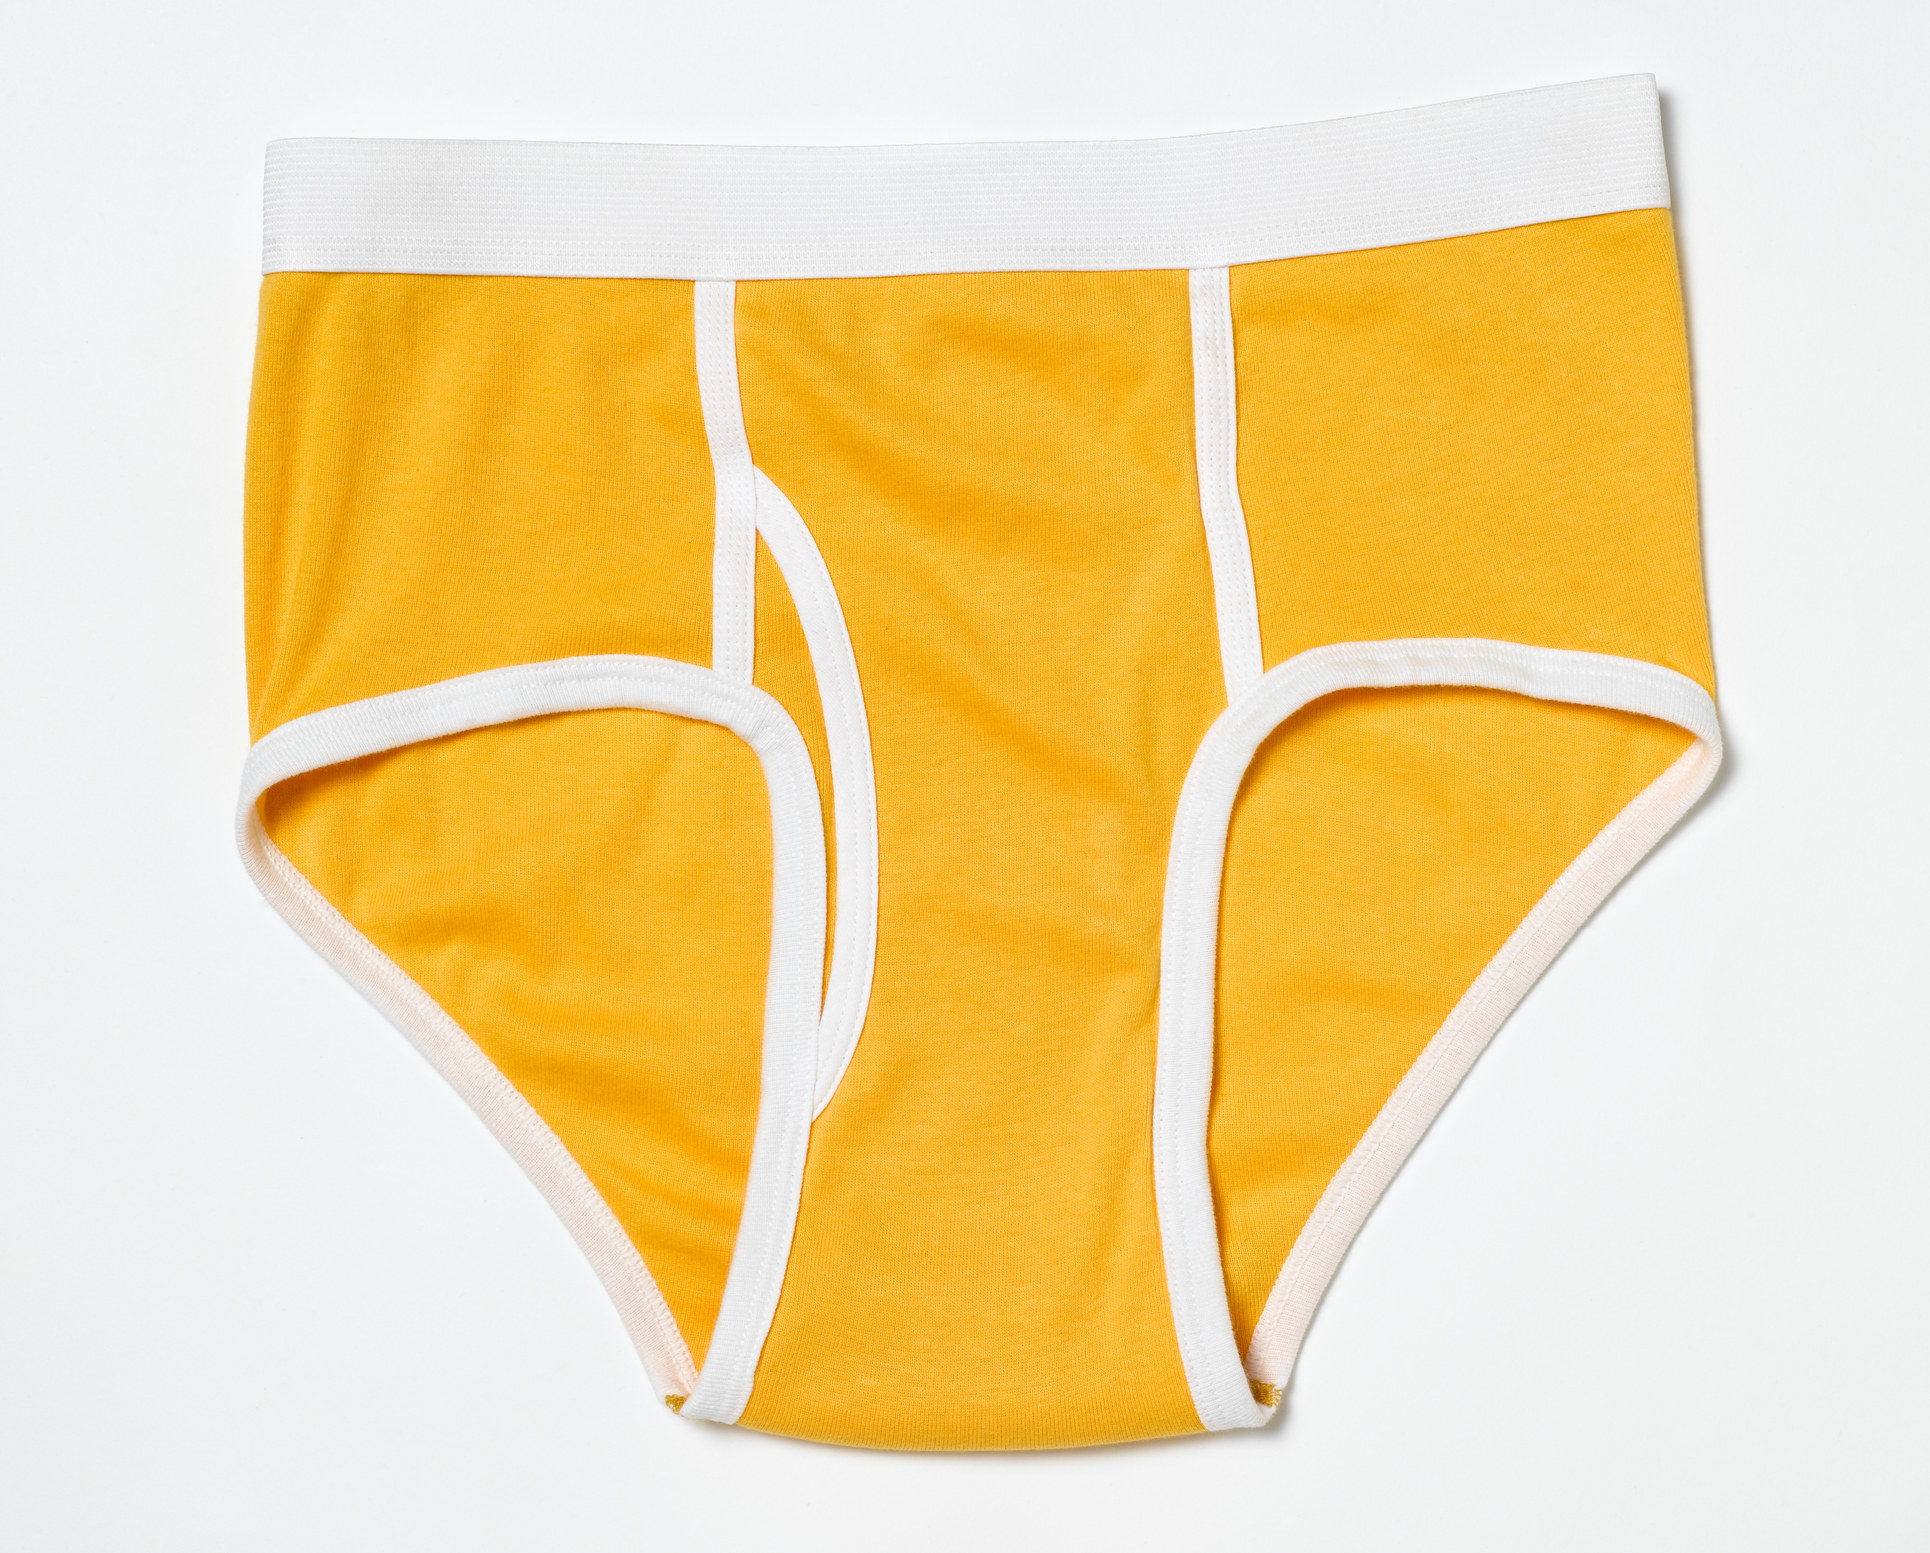 A pair of men&#x27;s yellow underwear